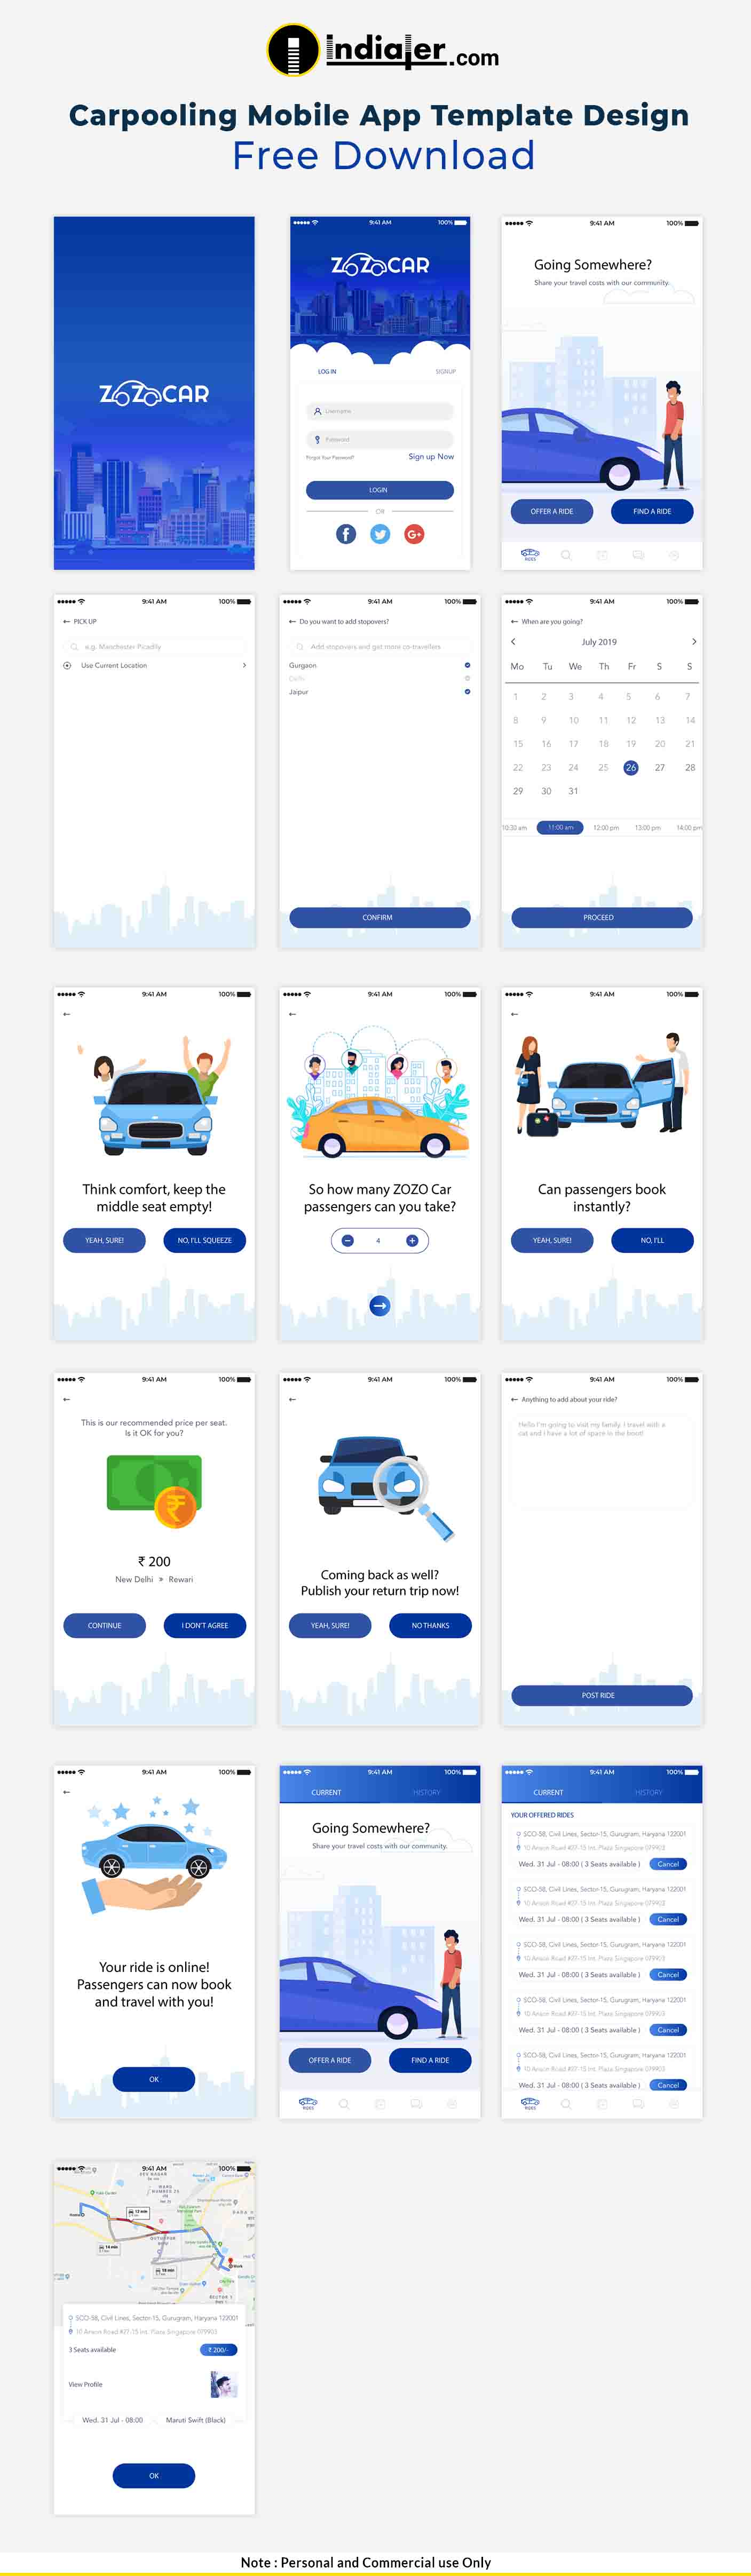 carpooling-mobile-app-template-design-free-download